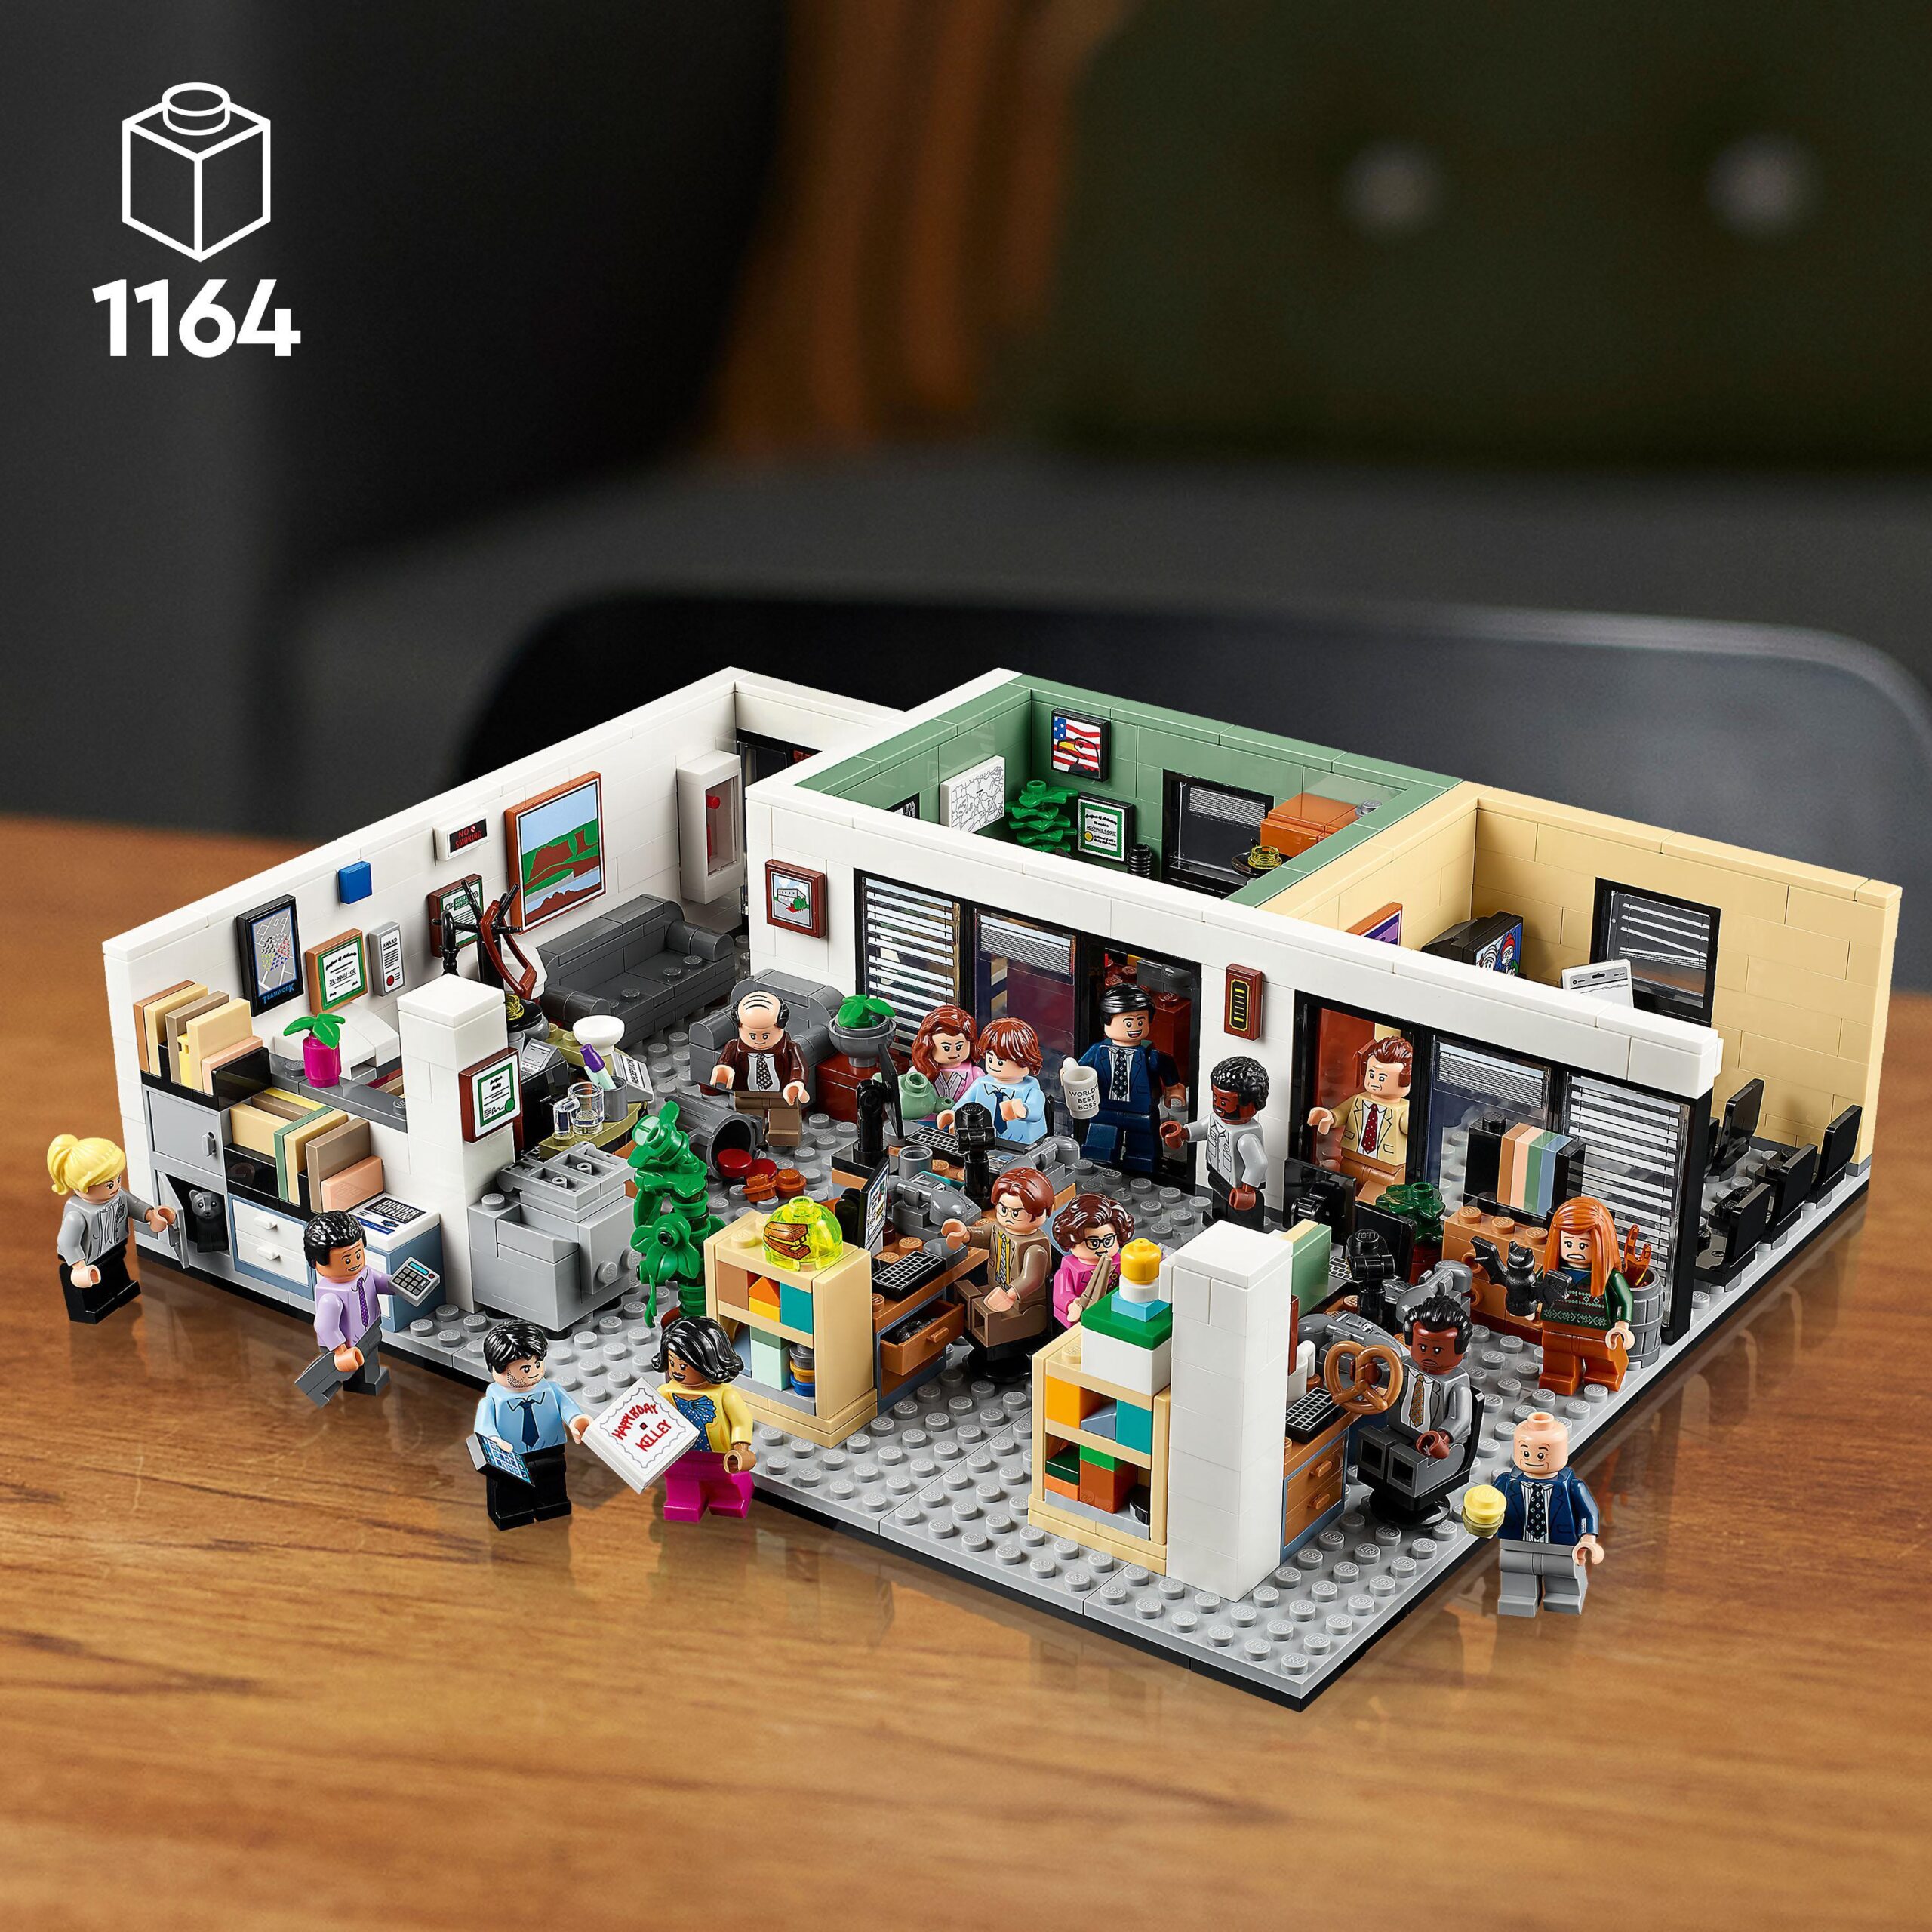 Lego ideas 21336 the office, modellismo da costruire adulti, idee regalo, set fai da te serie tv, 15 minifigure, gadget - LEGO IDEAS